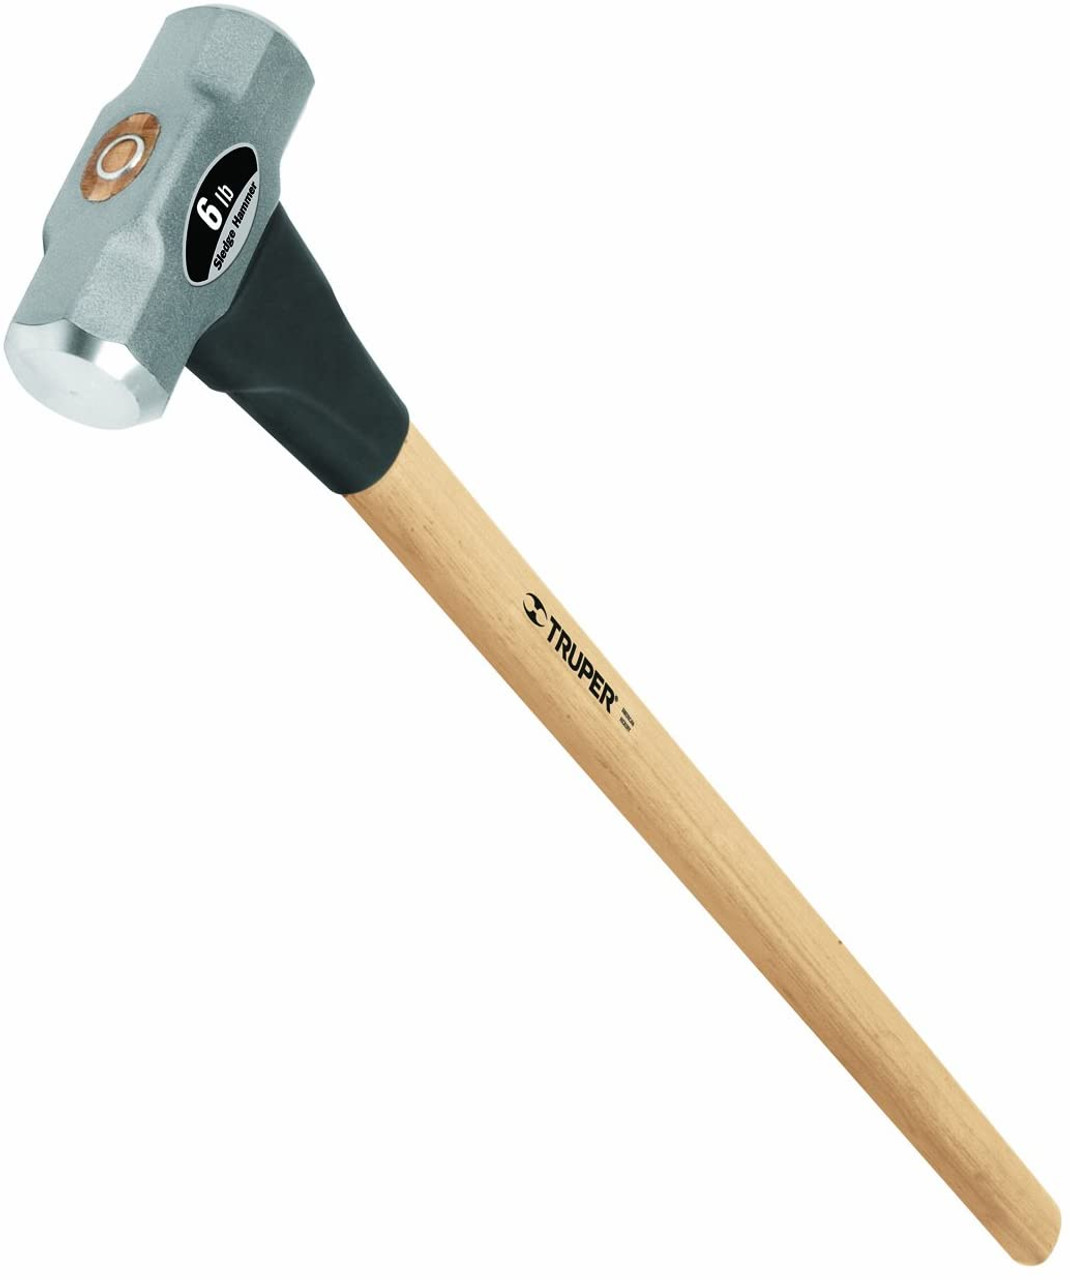 Truper Sledge Hammer Hickory Handle 36-Inch